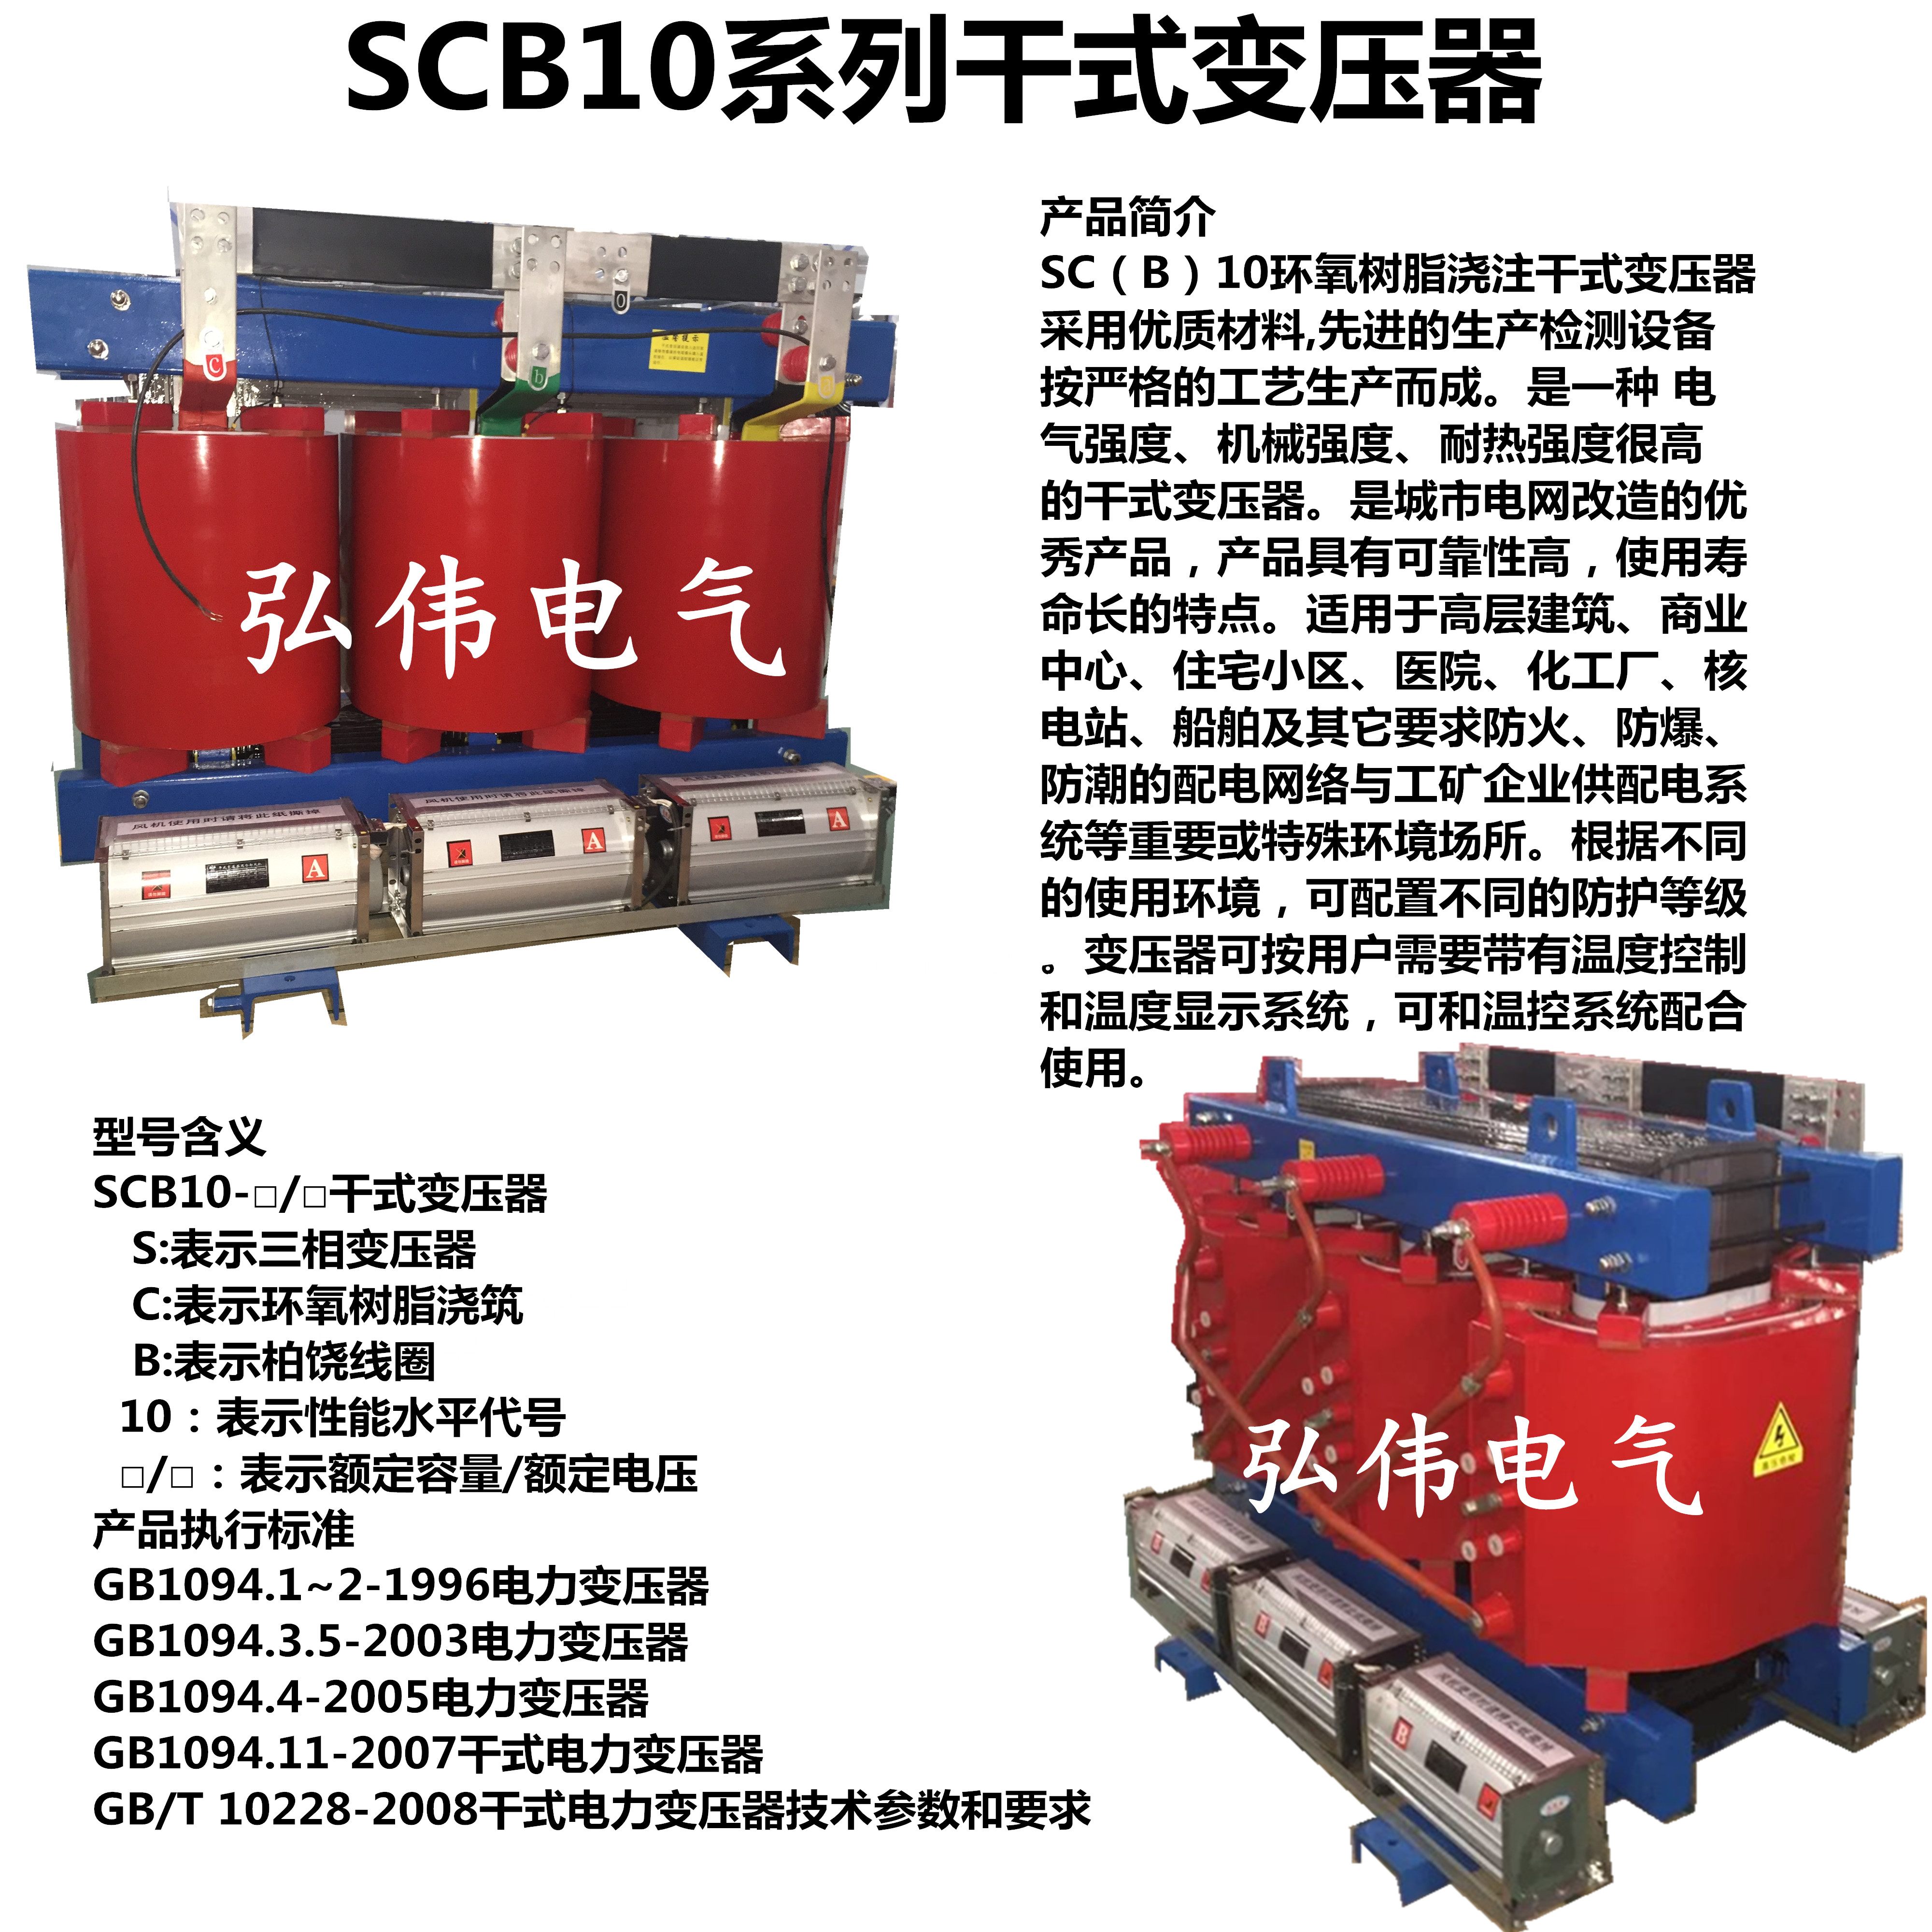 SCB10 /10KV干式变压器价格 SCB10,SCB10-630KVA,630KVA干式变压器,SCB10 /10KV,干式变压器